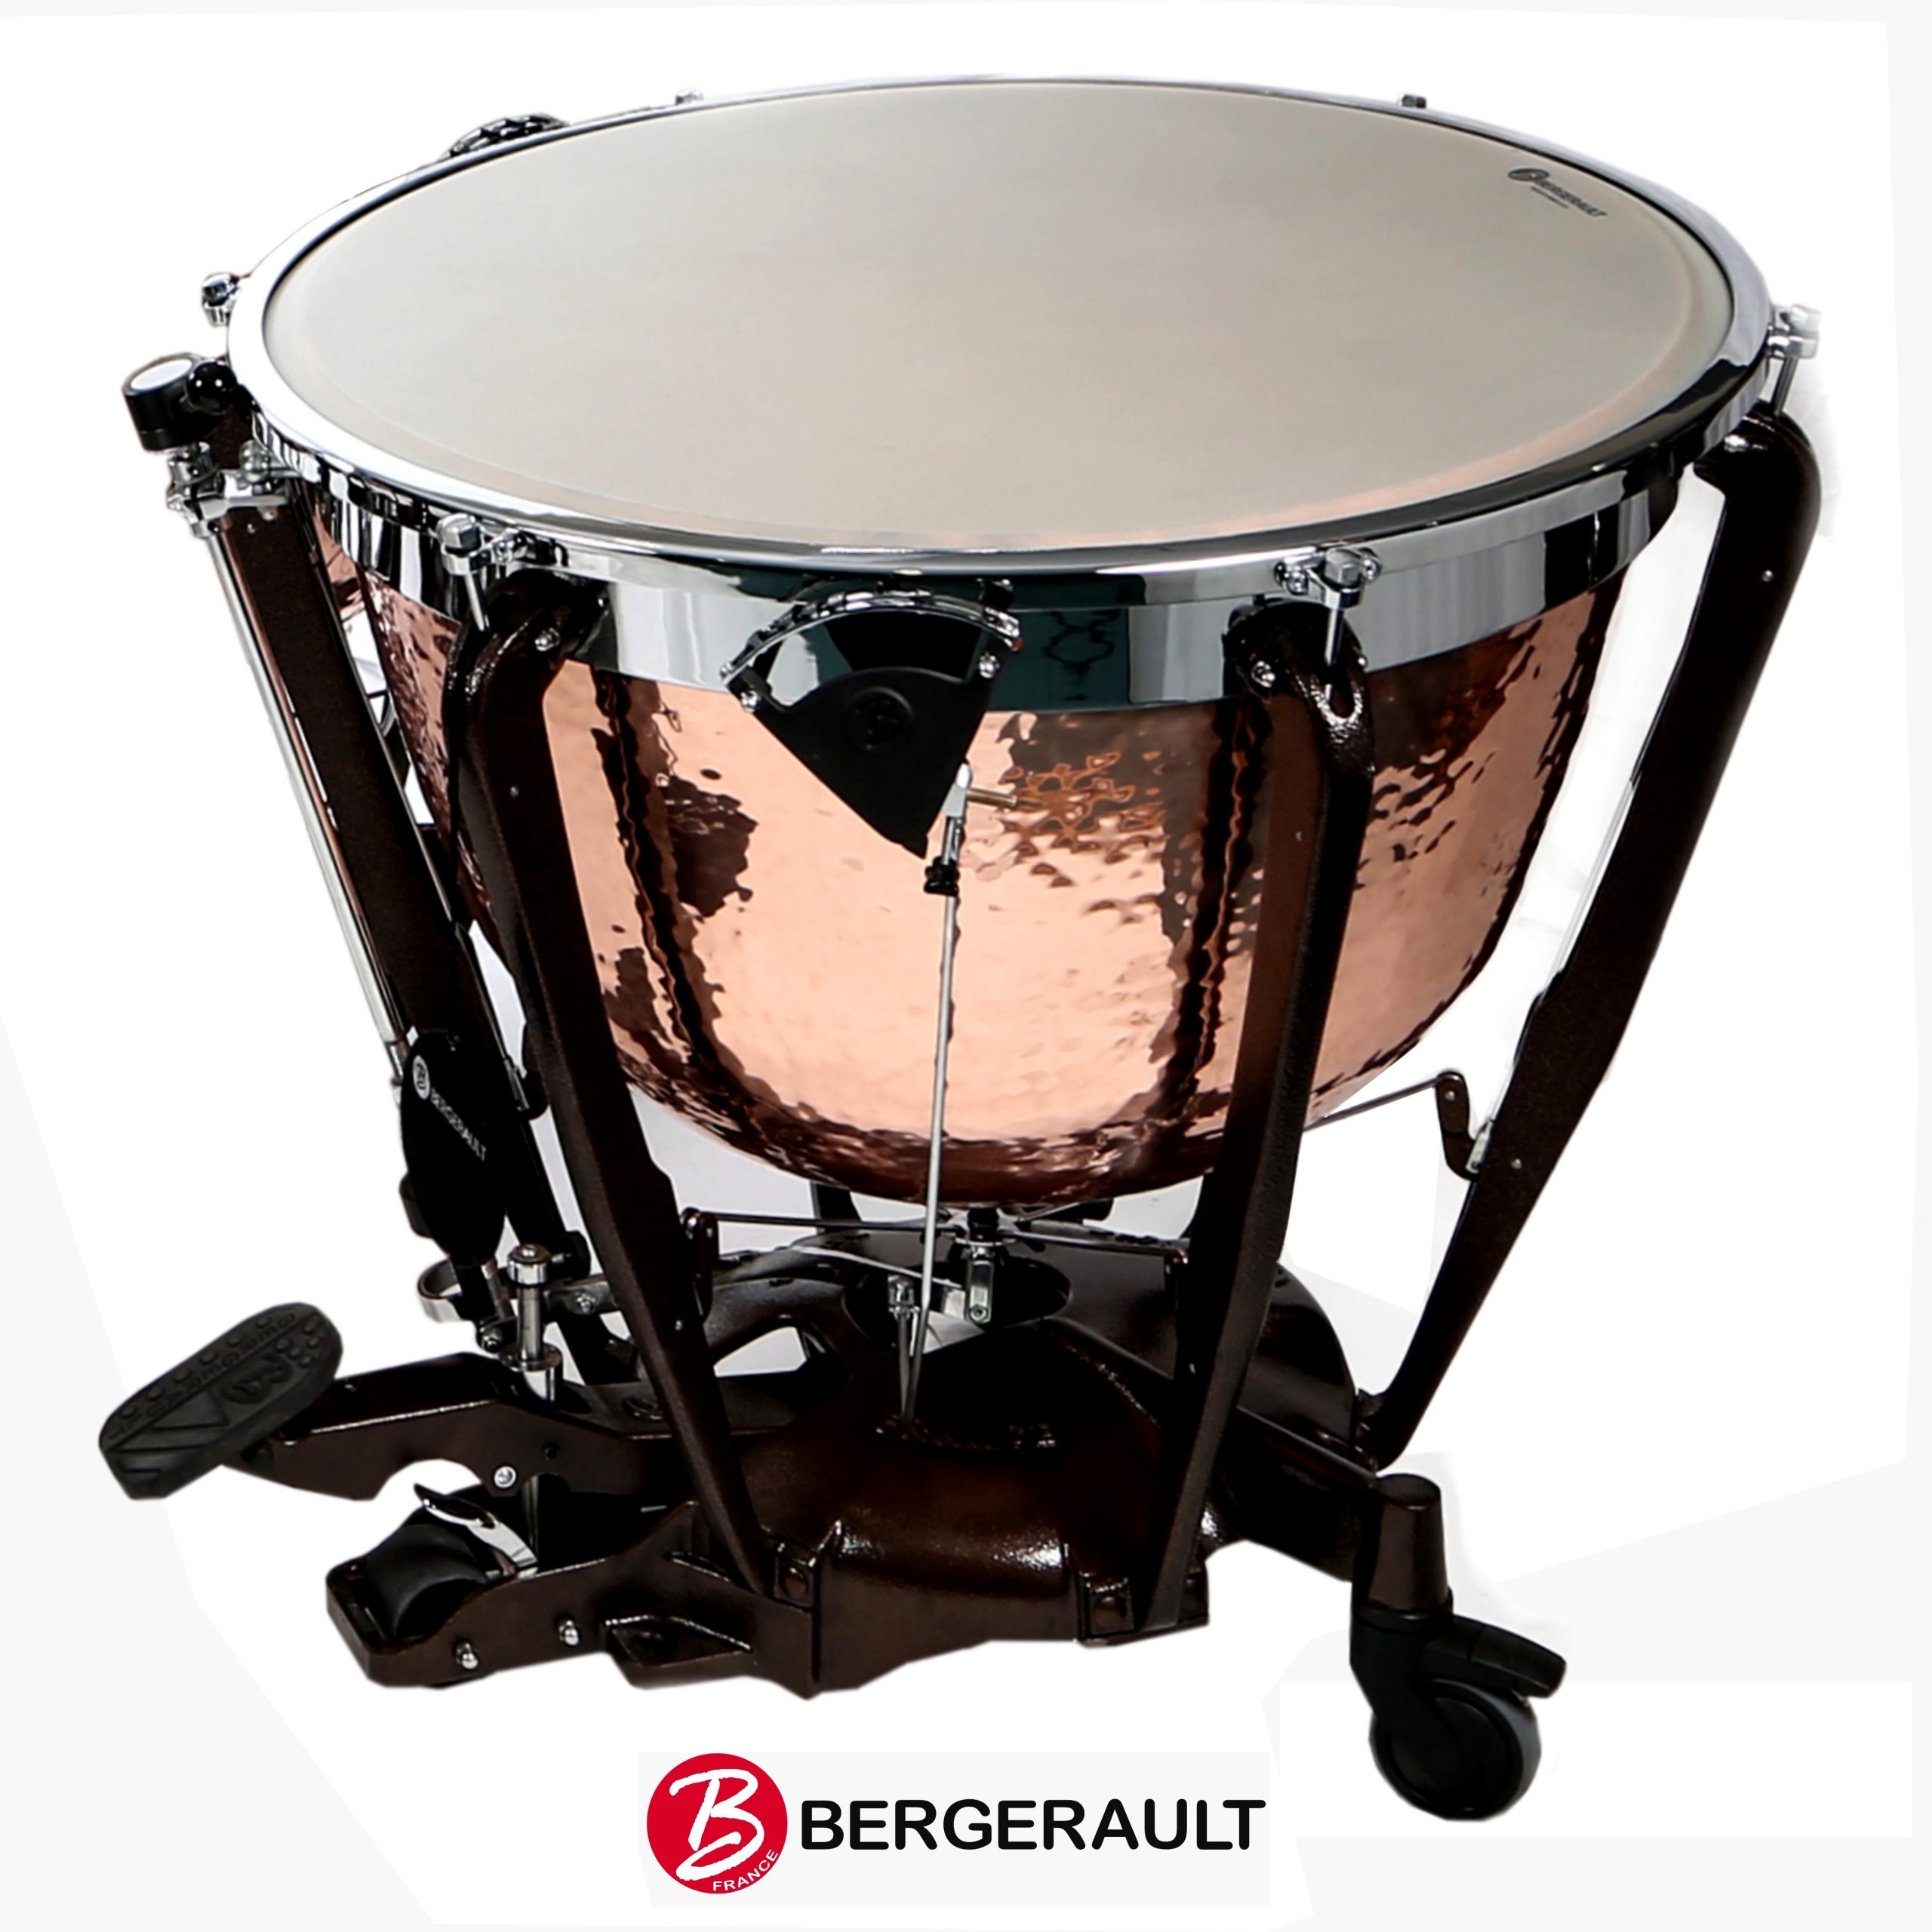 Bergerault Timpani Grand Symphonic Ø 29" cambered copper hand hammered